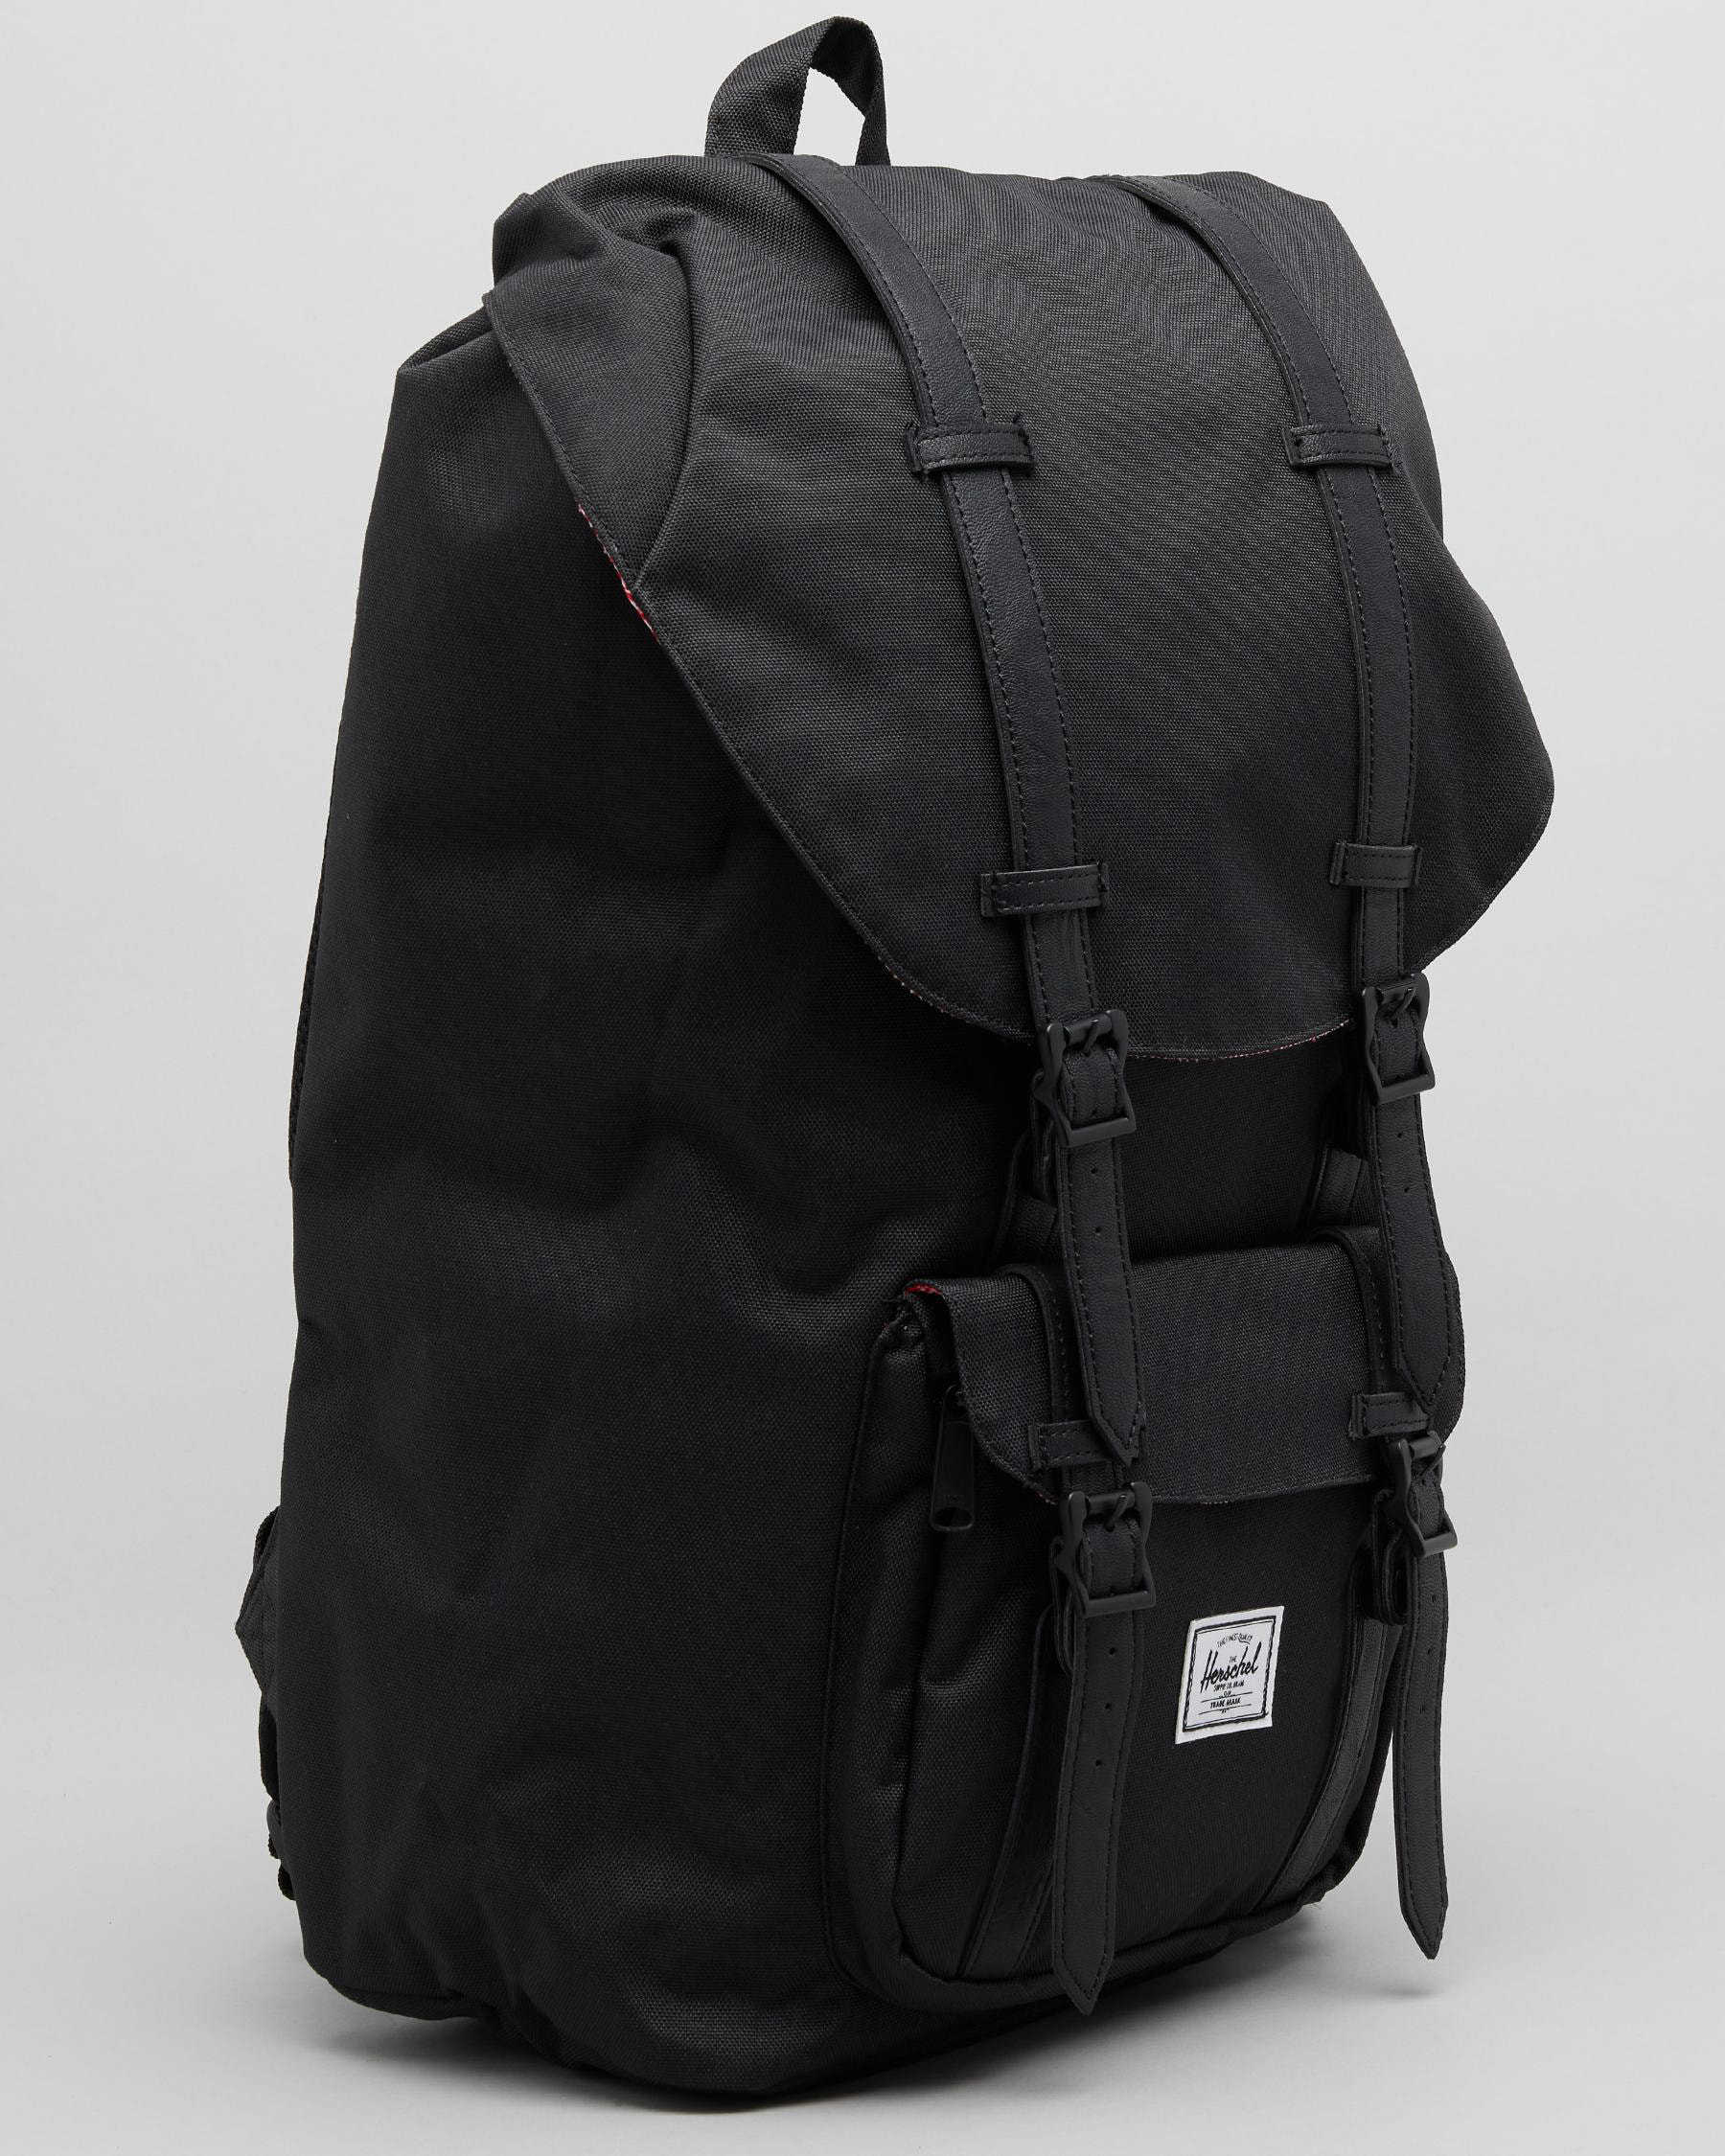 Herschel Little America Backpack In Black/black - Fast Shipping & Easy ...